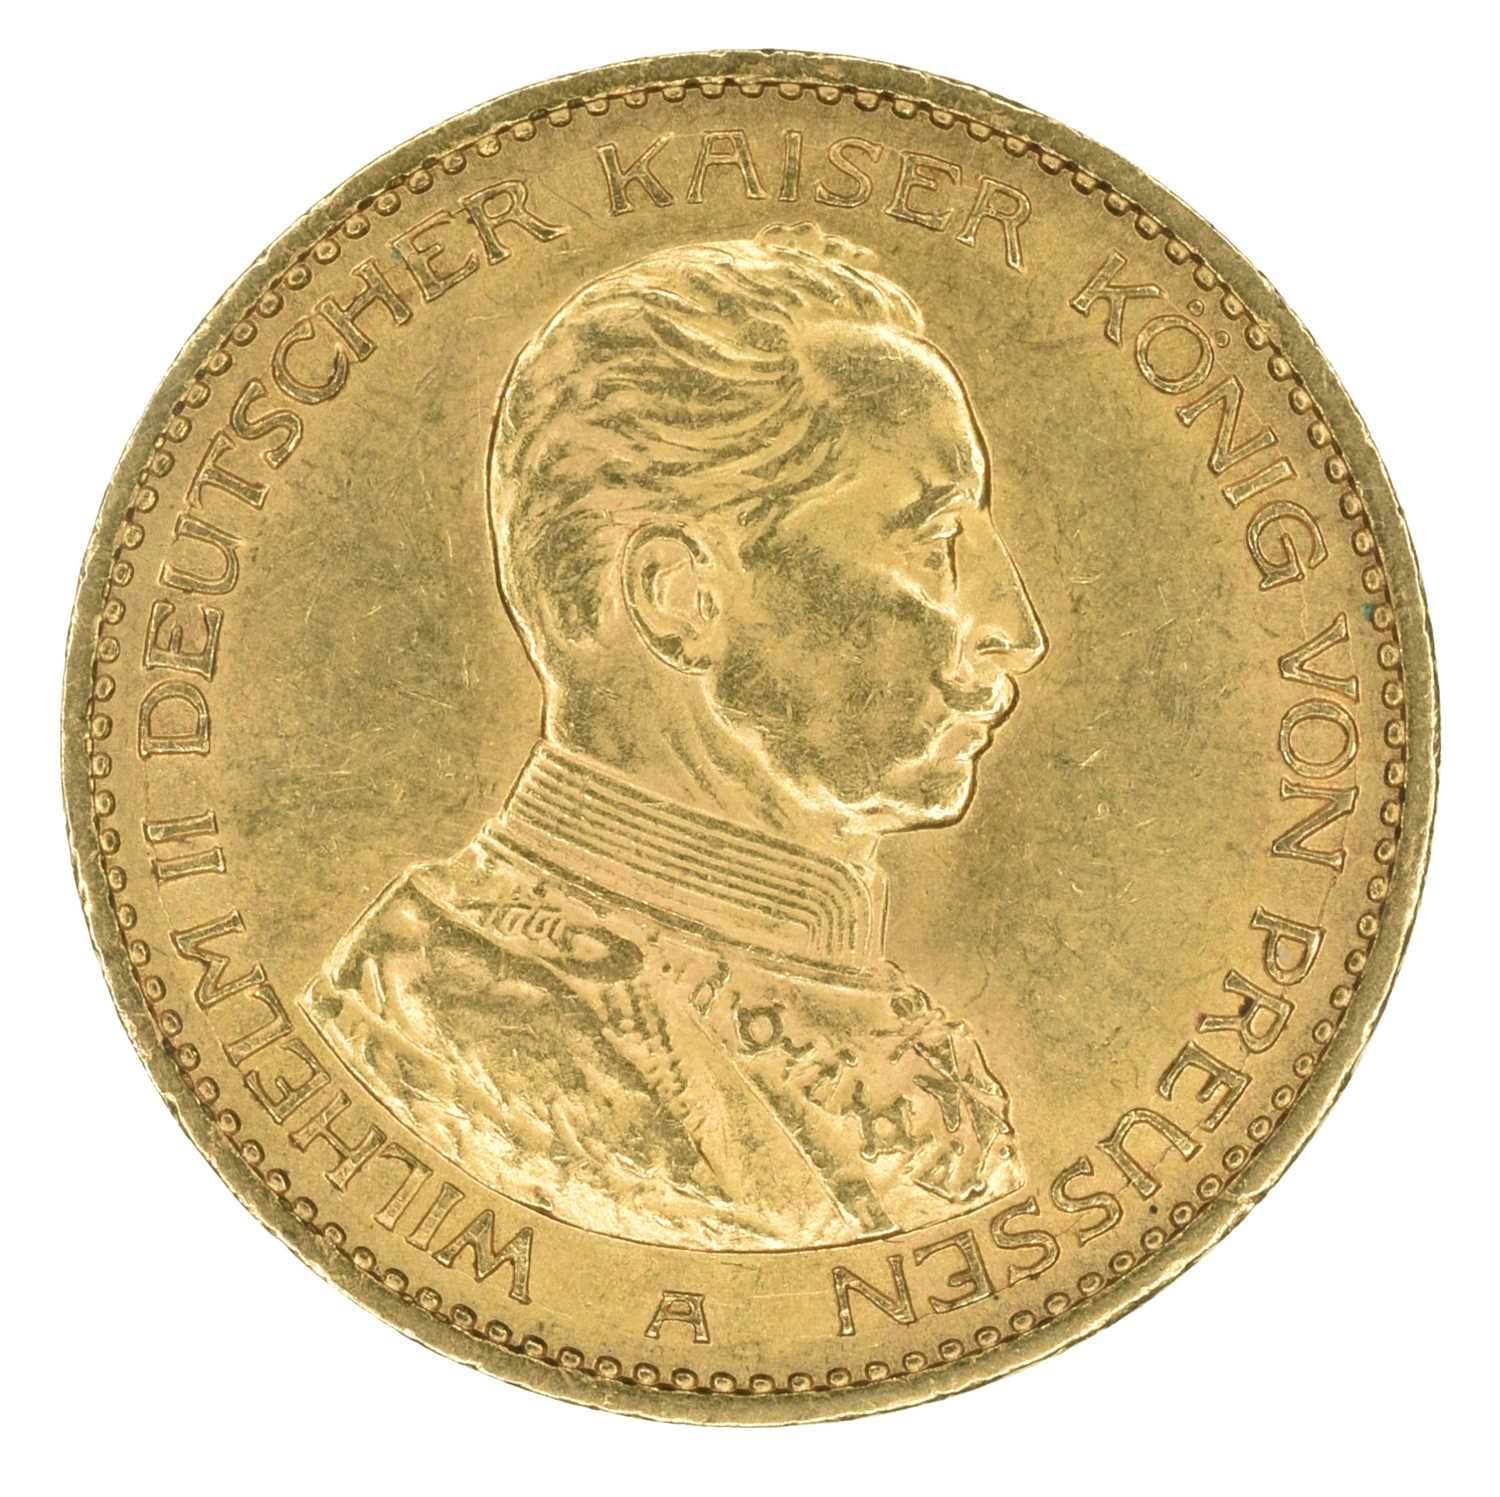 Lot 46 - German States, Prussia, Wilhelm II (1888-1918), 20 (Twenty) Mark, 1913, gold coin.